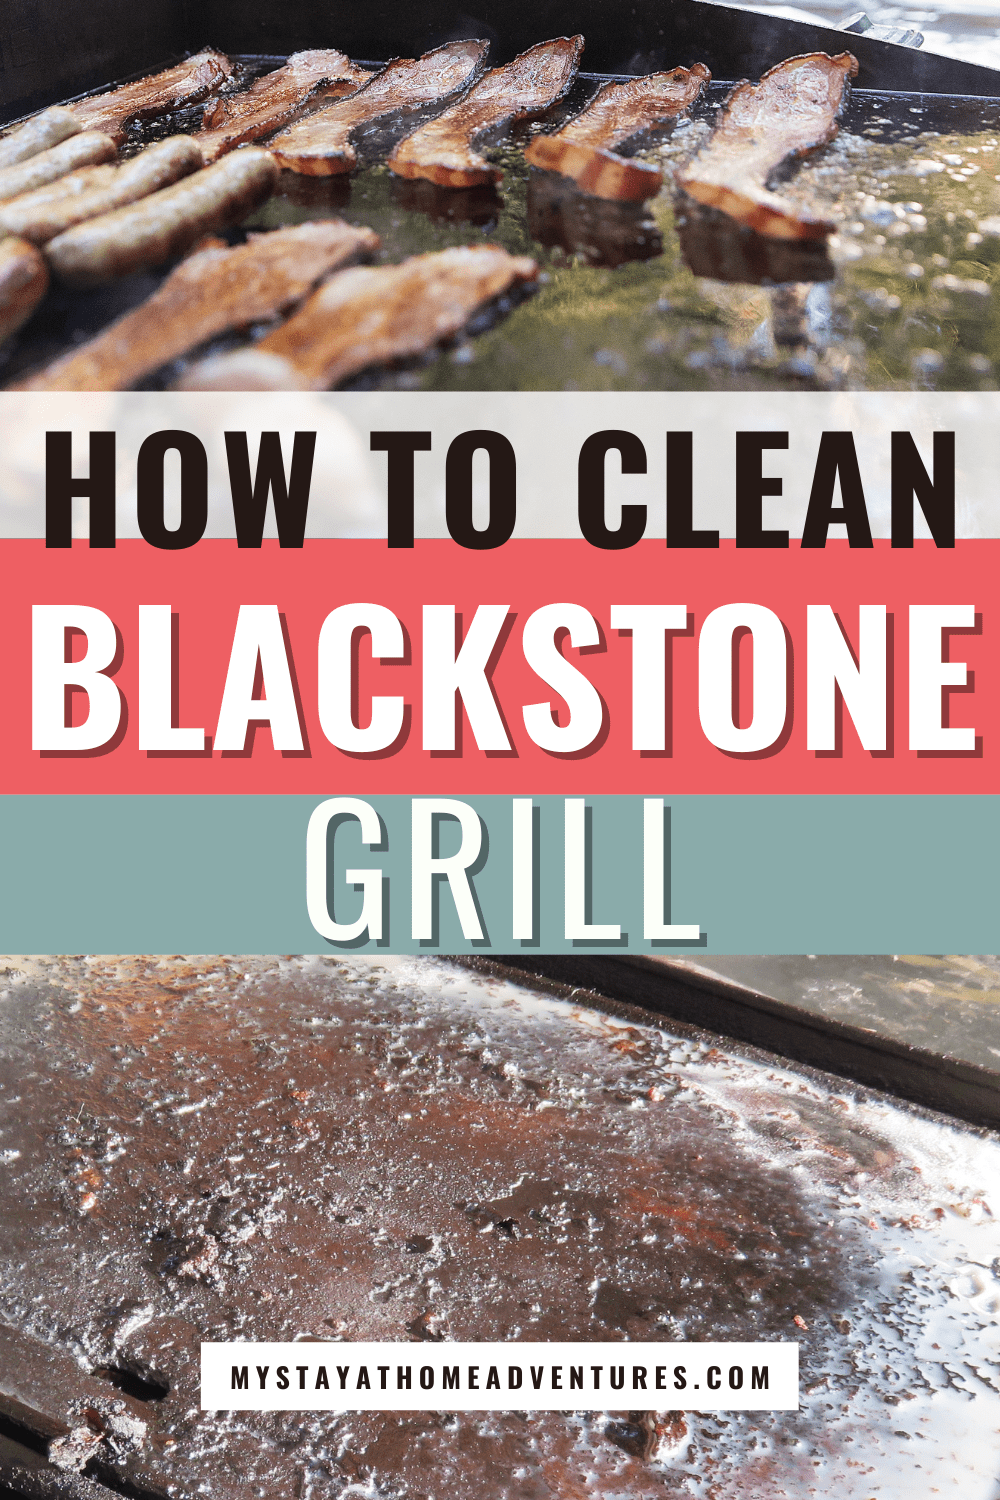 How to Clean a Blackstone Grill via @mystayathome